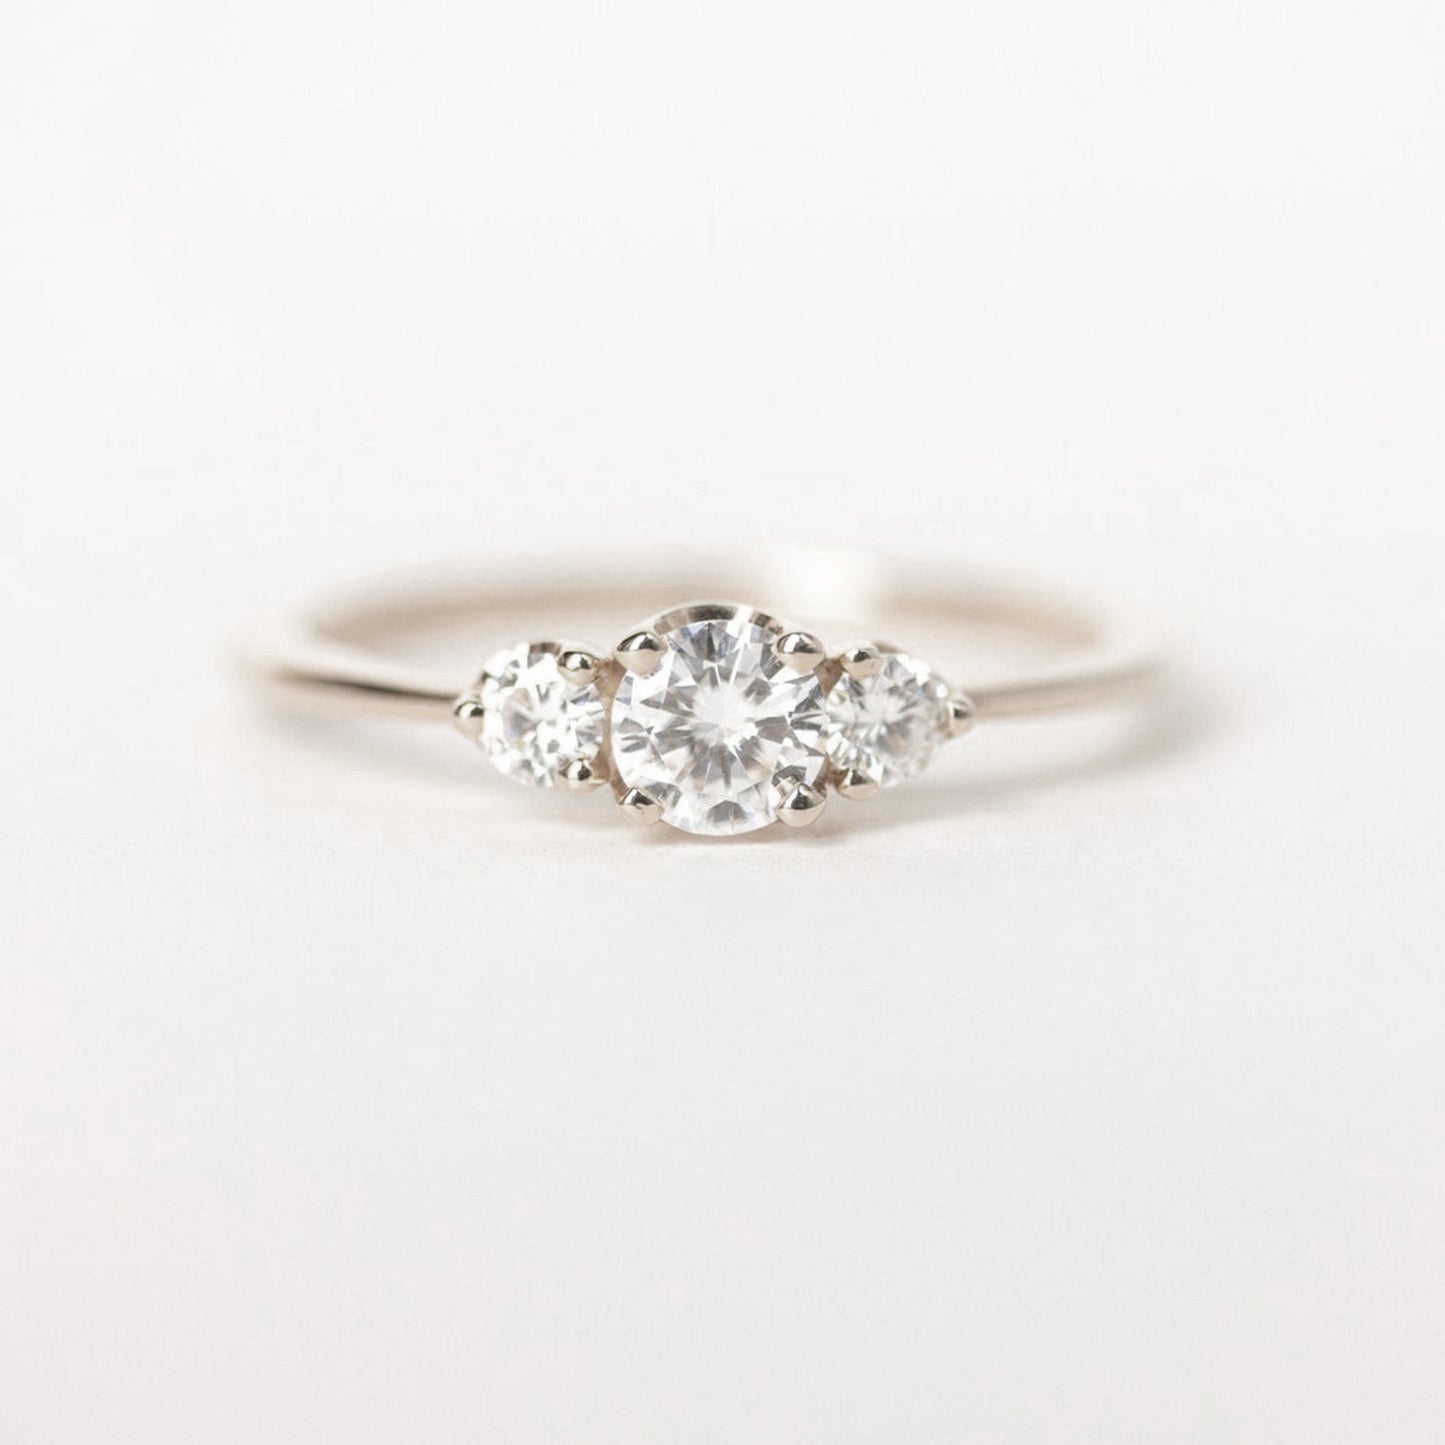 Three Diamond Engagement Ring in 14k Gold.